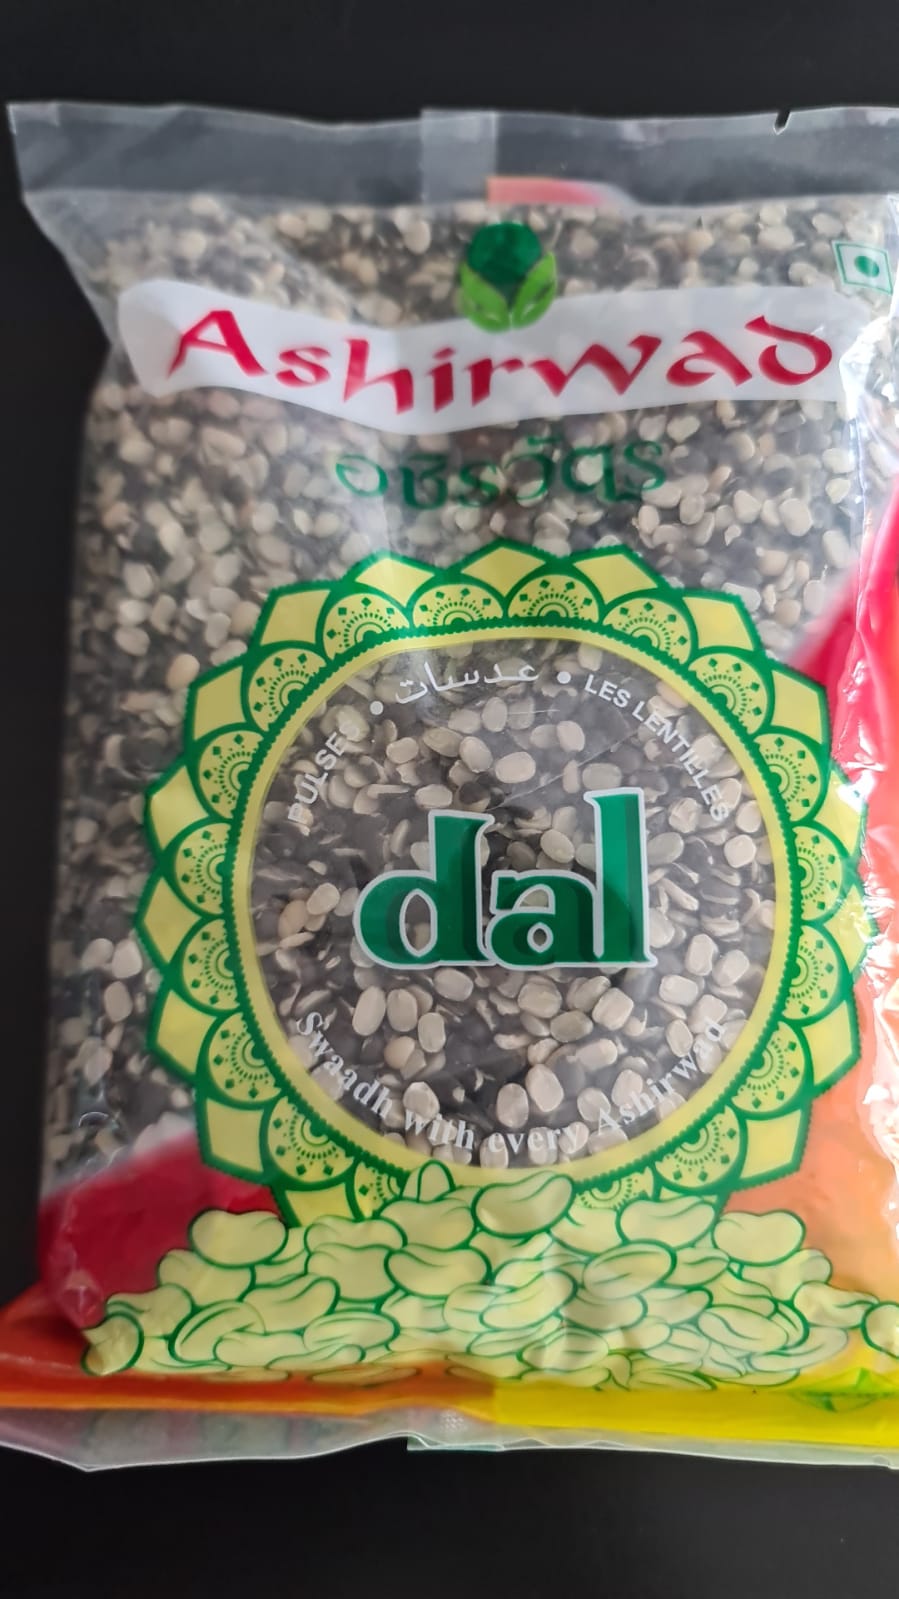 Mahakaal - Ashirwad Moong Chilka (Split Green Lentils) 500 Gms